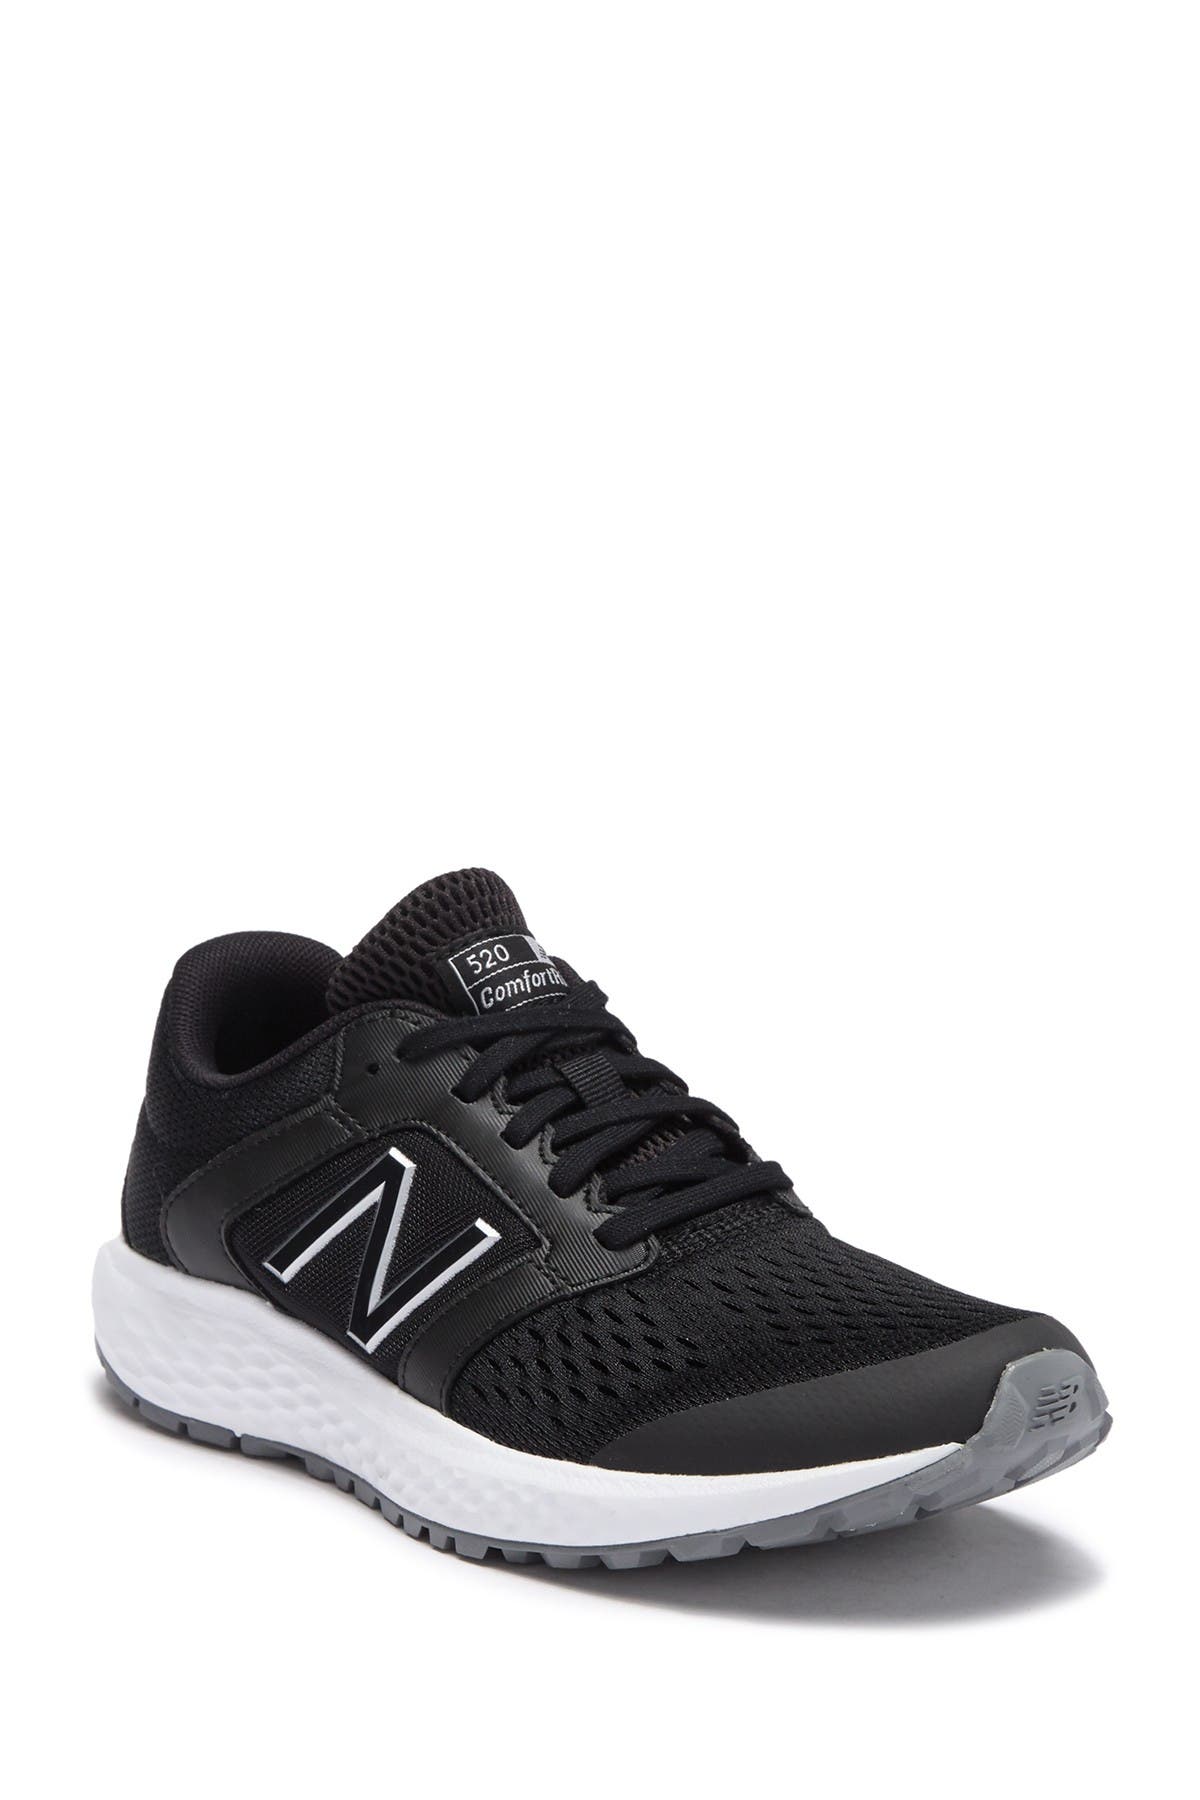 New Balance | 520 Comfort Ride Athletic Sneaker | Nordstrom Rack